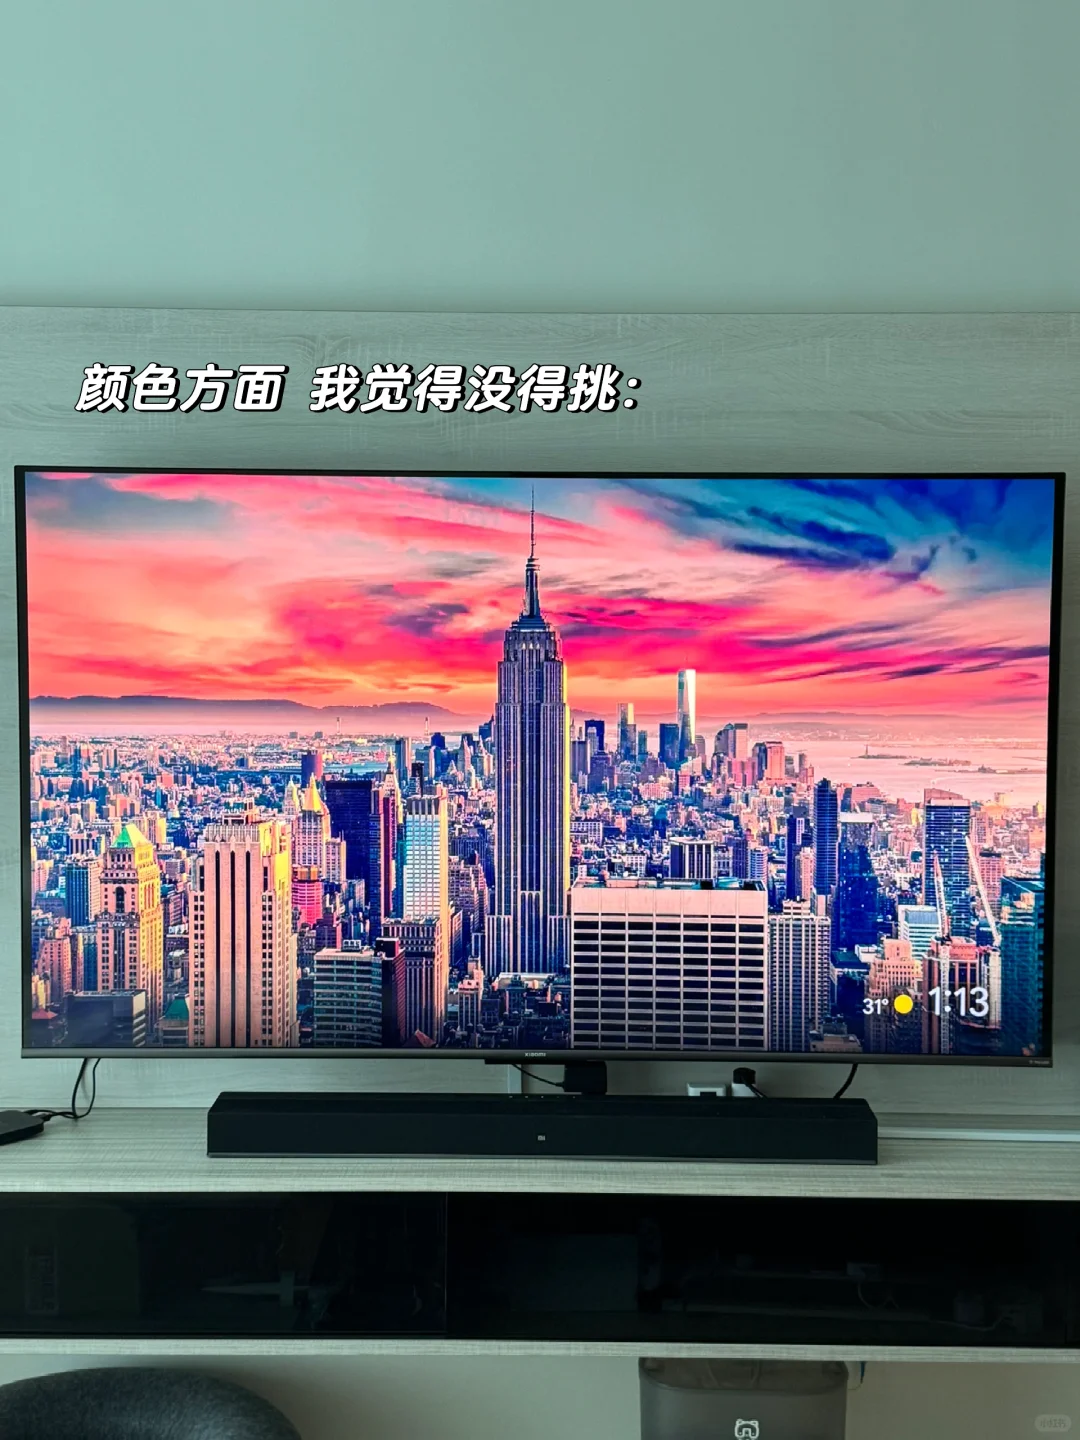 🇲🇾 65寸miniled 电视不到Rm3000!!